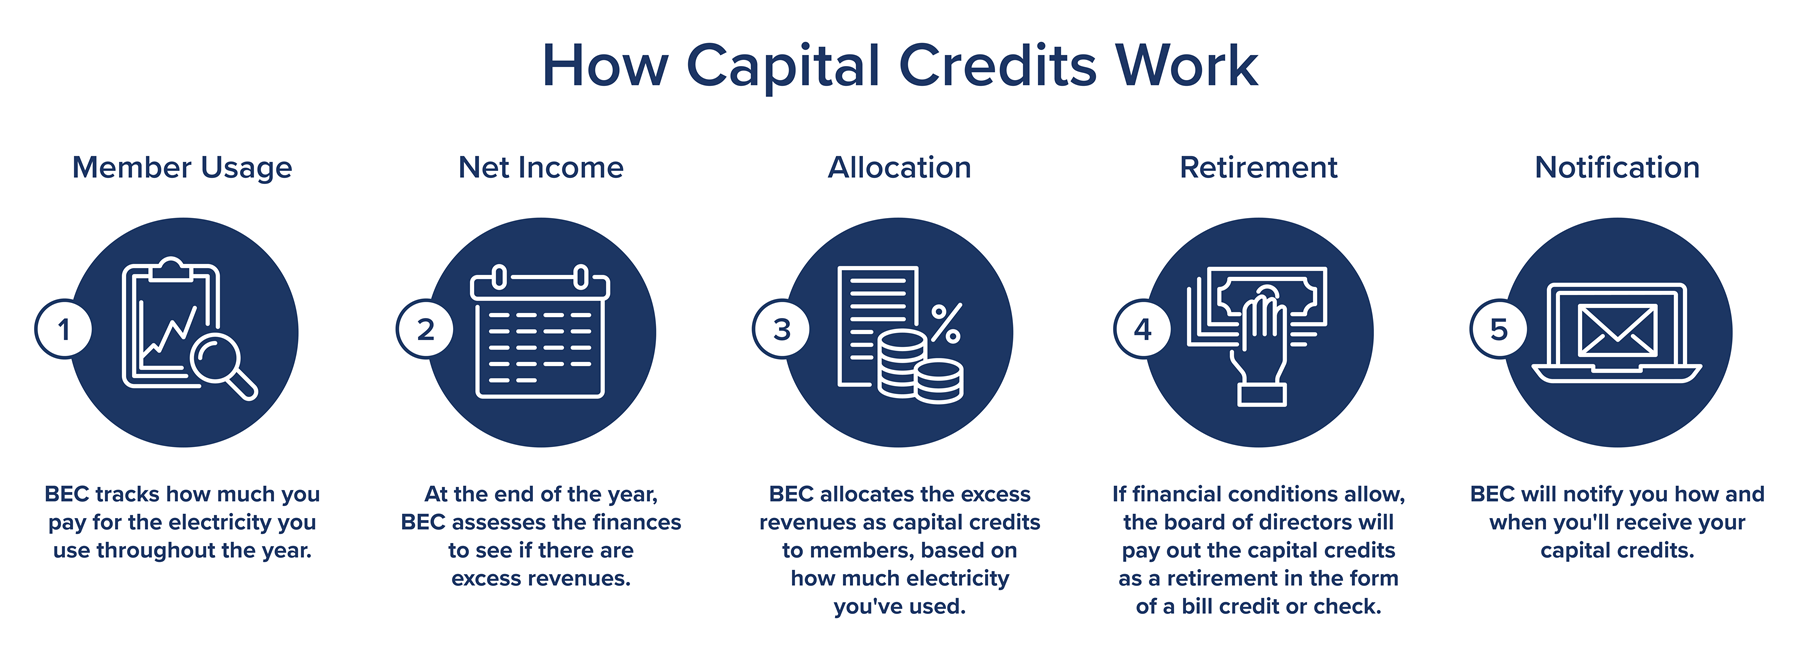 How-Capital-Credits-Work_BEC_2020_4.png